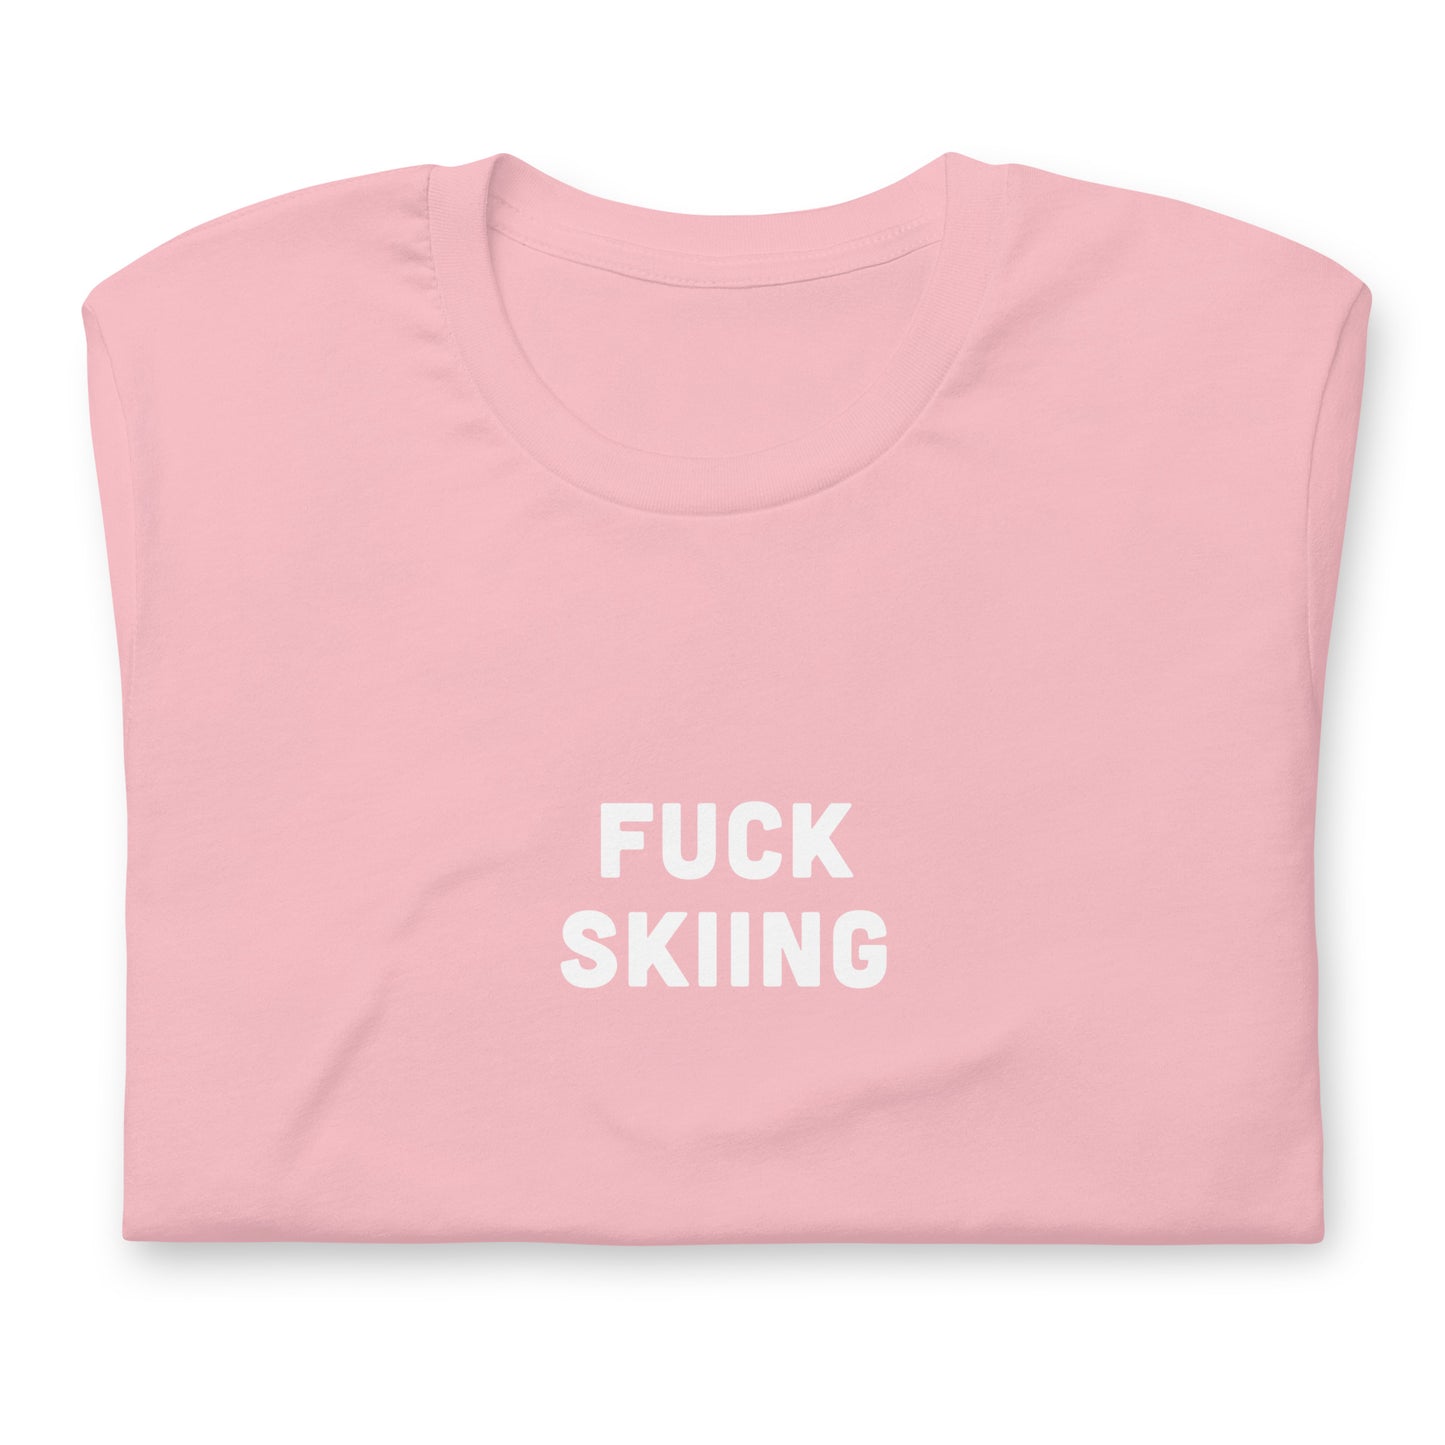 Fuck Skiing T-Shirt Size S Color Asphalt